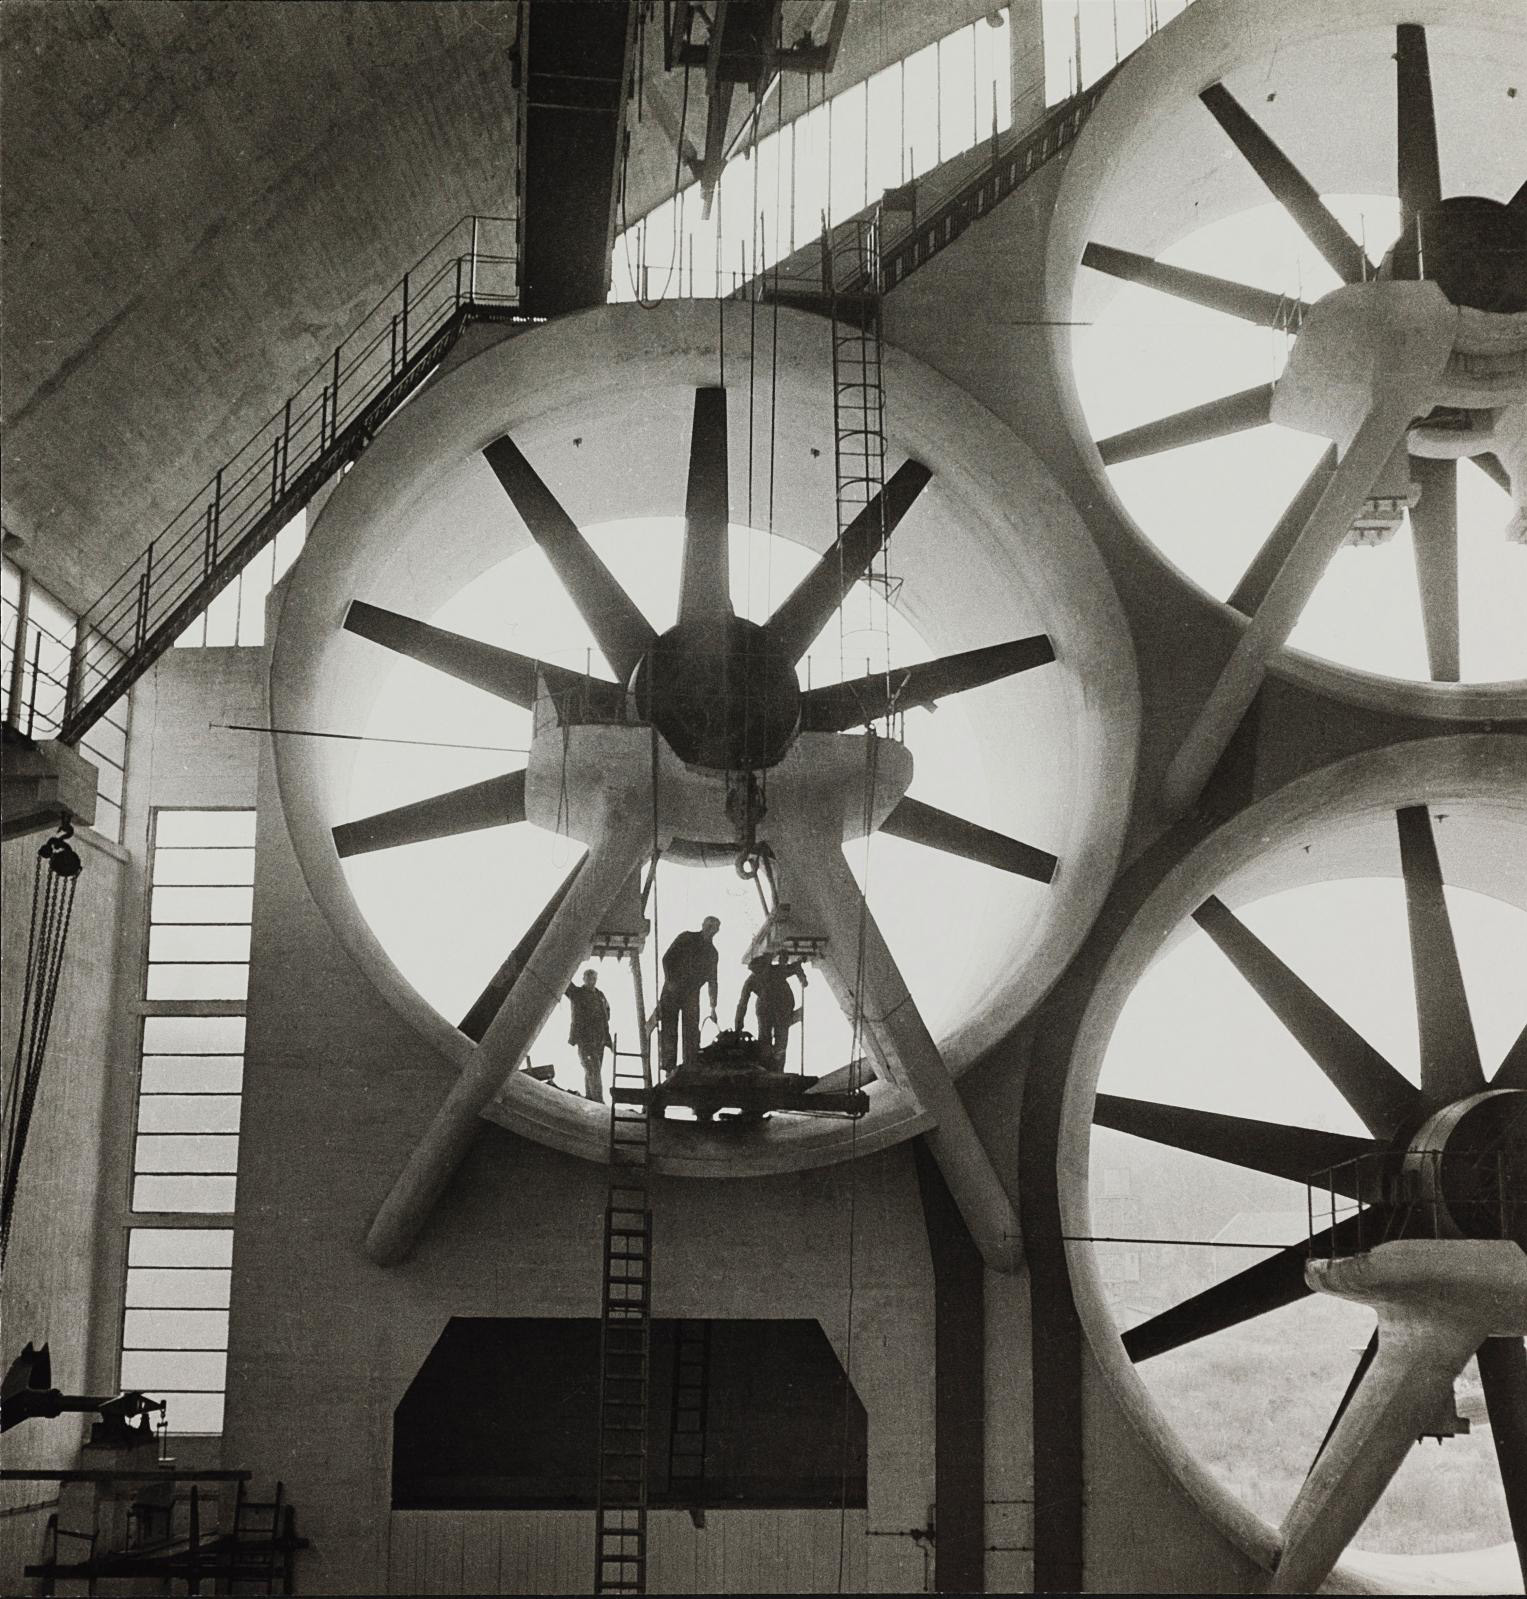 Gaston Paris, Wind Tunnel at Chalais-Meudon, 1936, gelatin silver print, 20 x 20.2 cm/7.87 x 7.95 in, Roger-Viollet collection, Bibliothèq